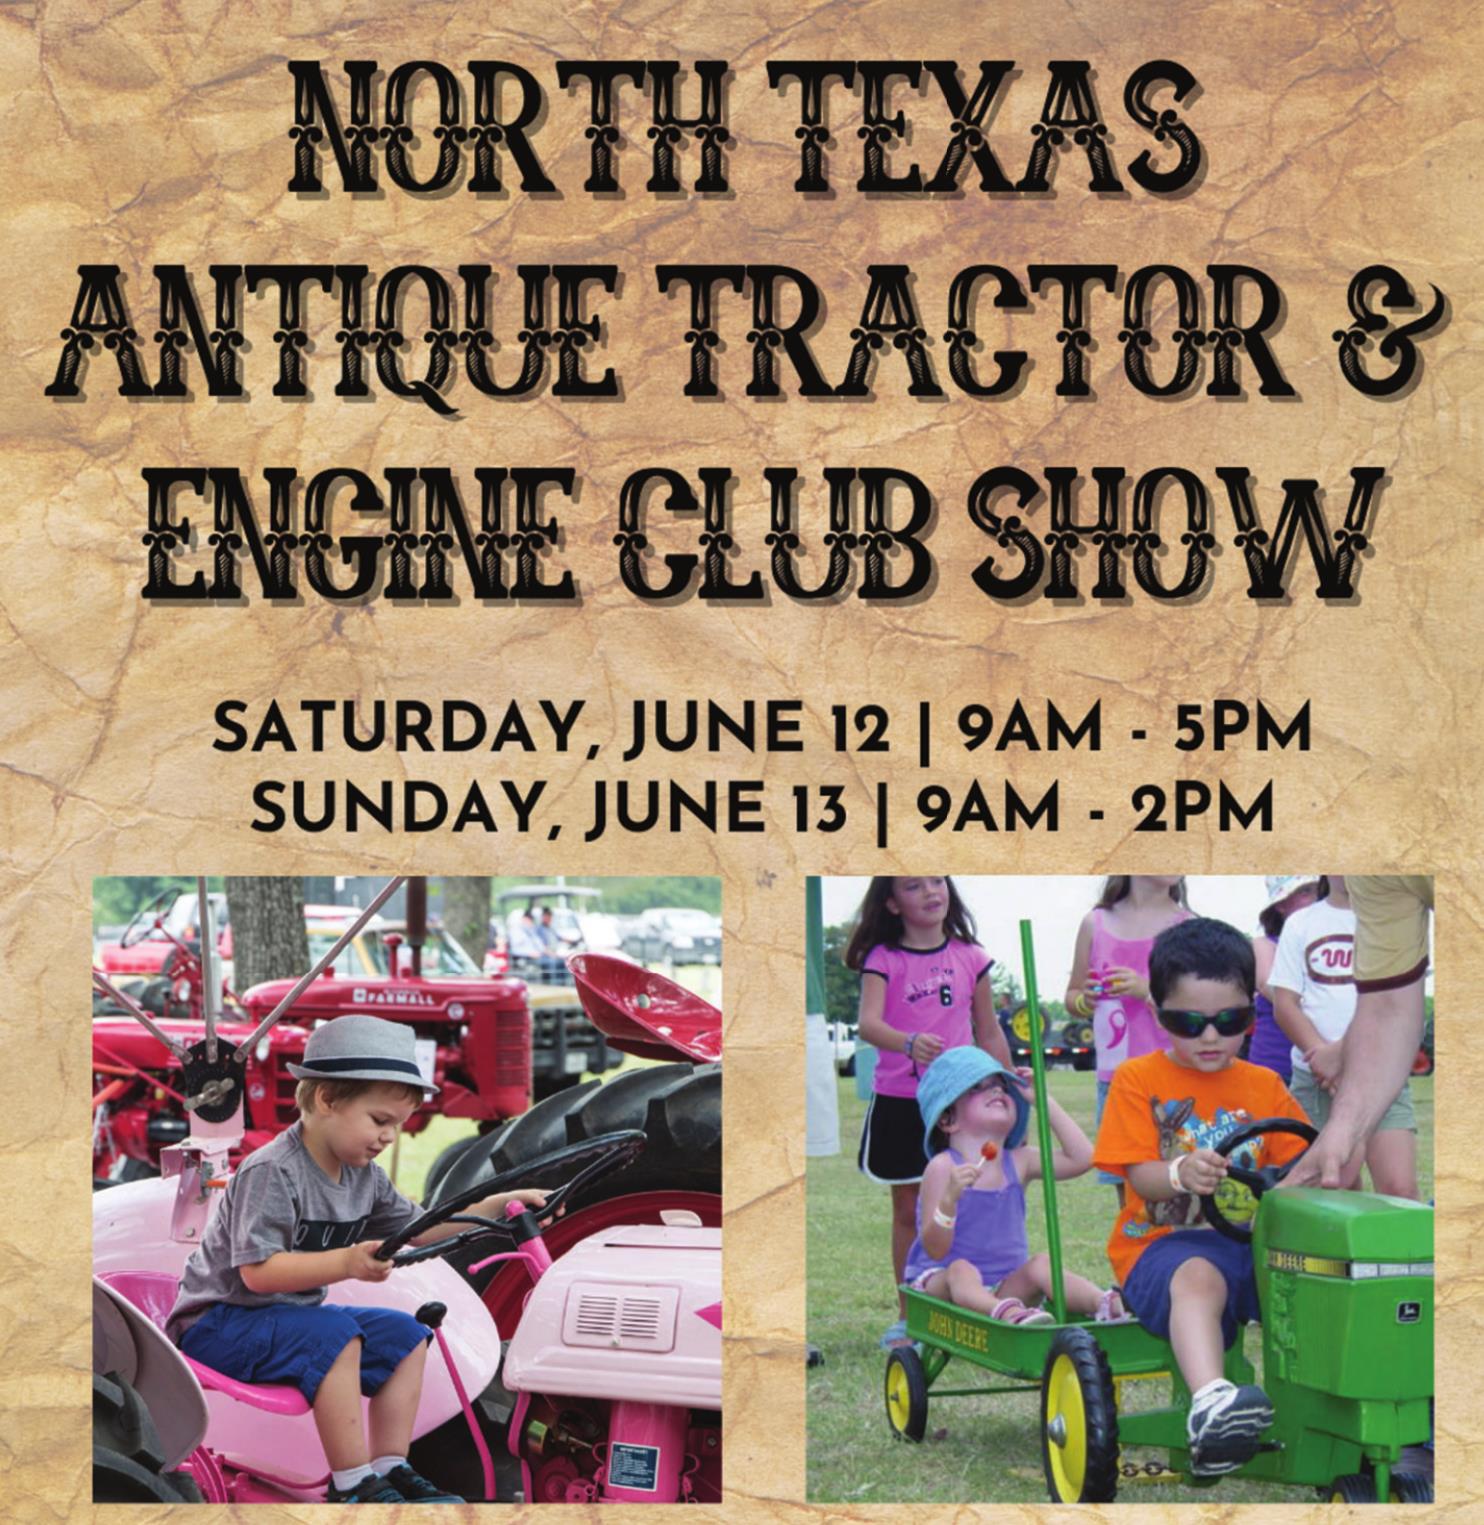 North Texas Antique Tractor Show Set for June 1213 Terrell Tribune